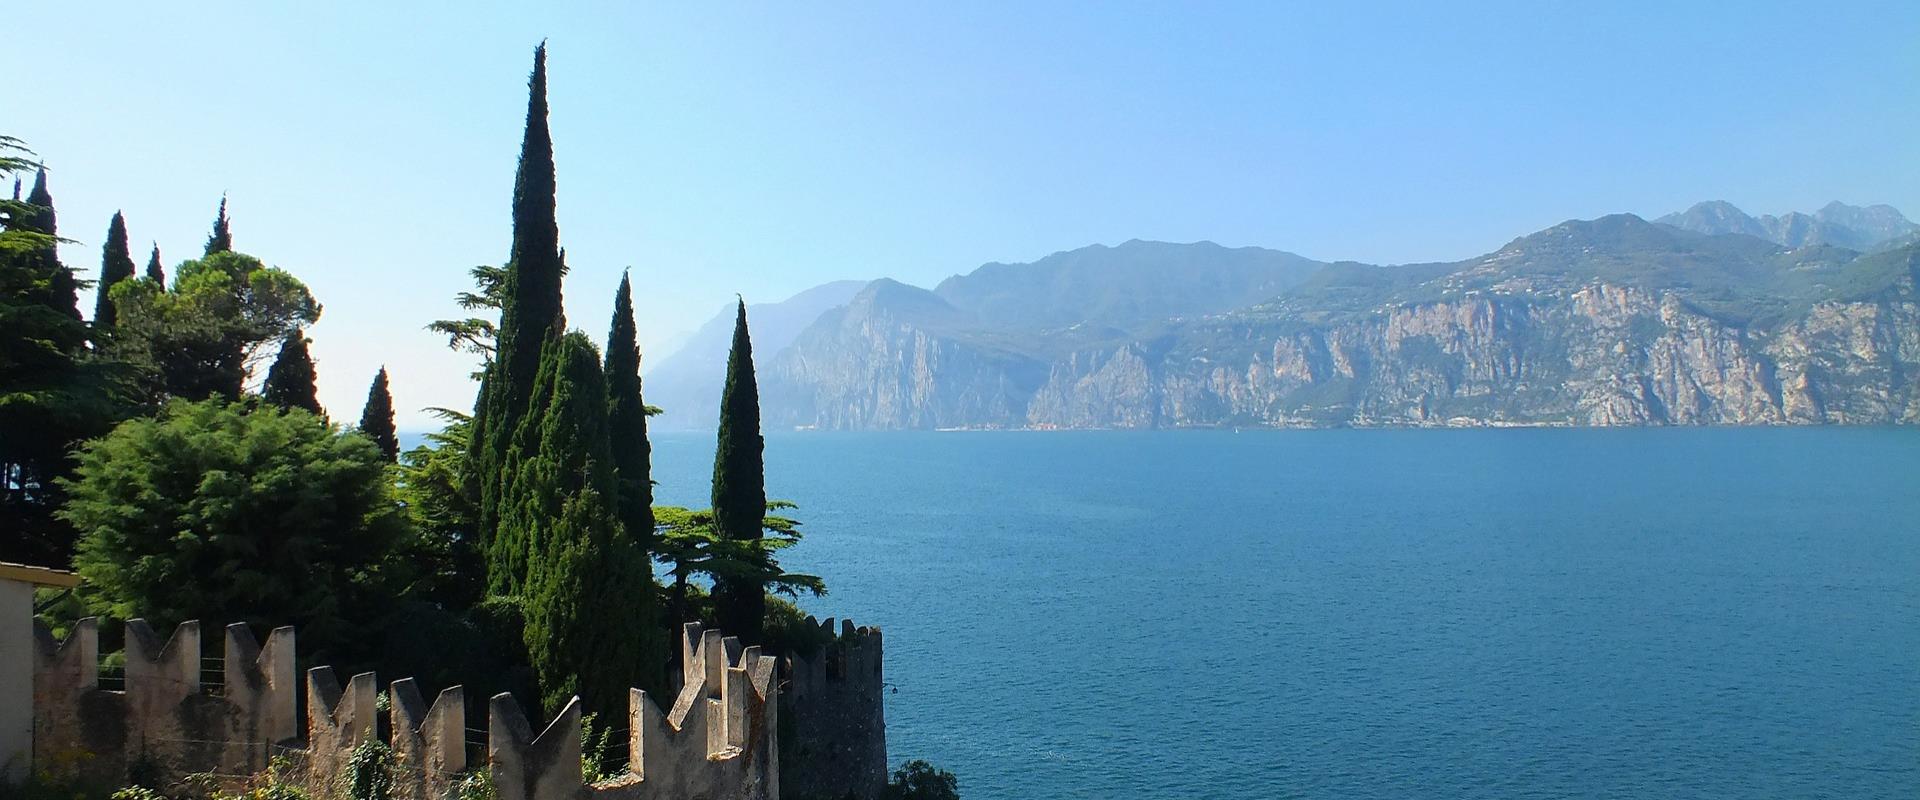 Best Western Hotel Turismo, near Lake Garda